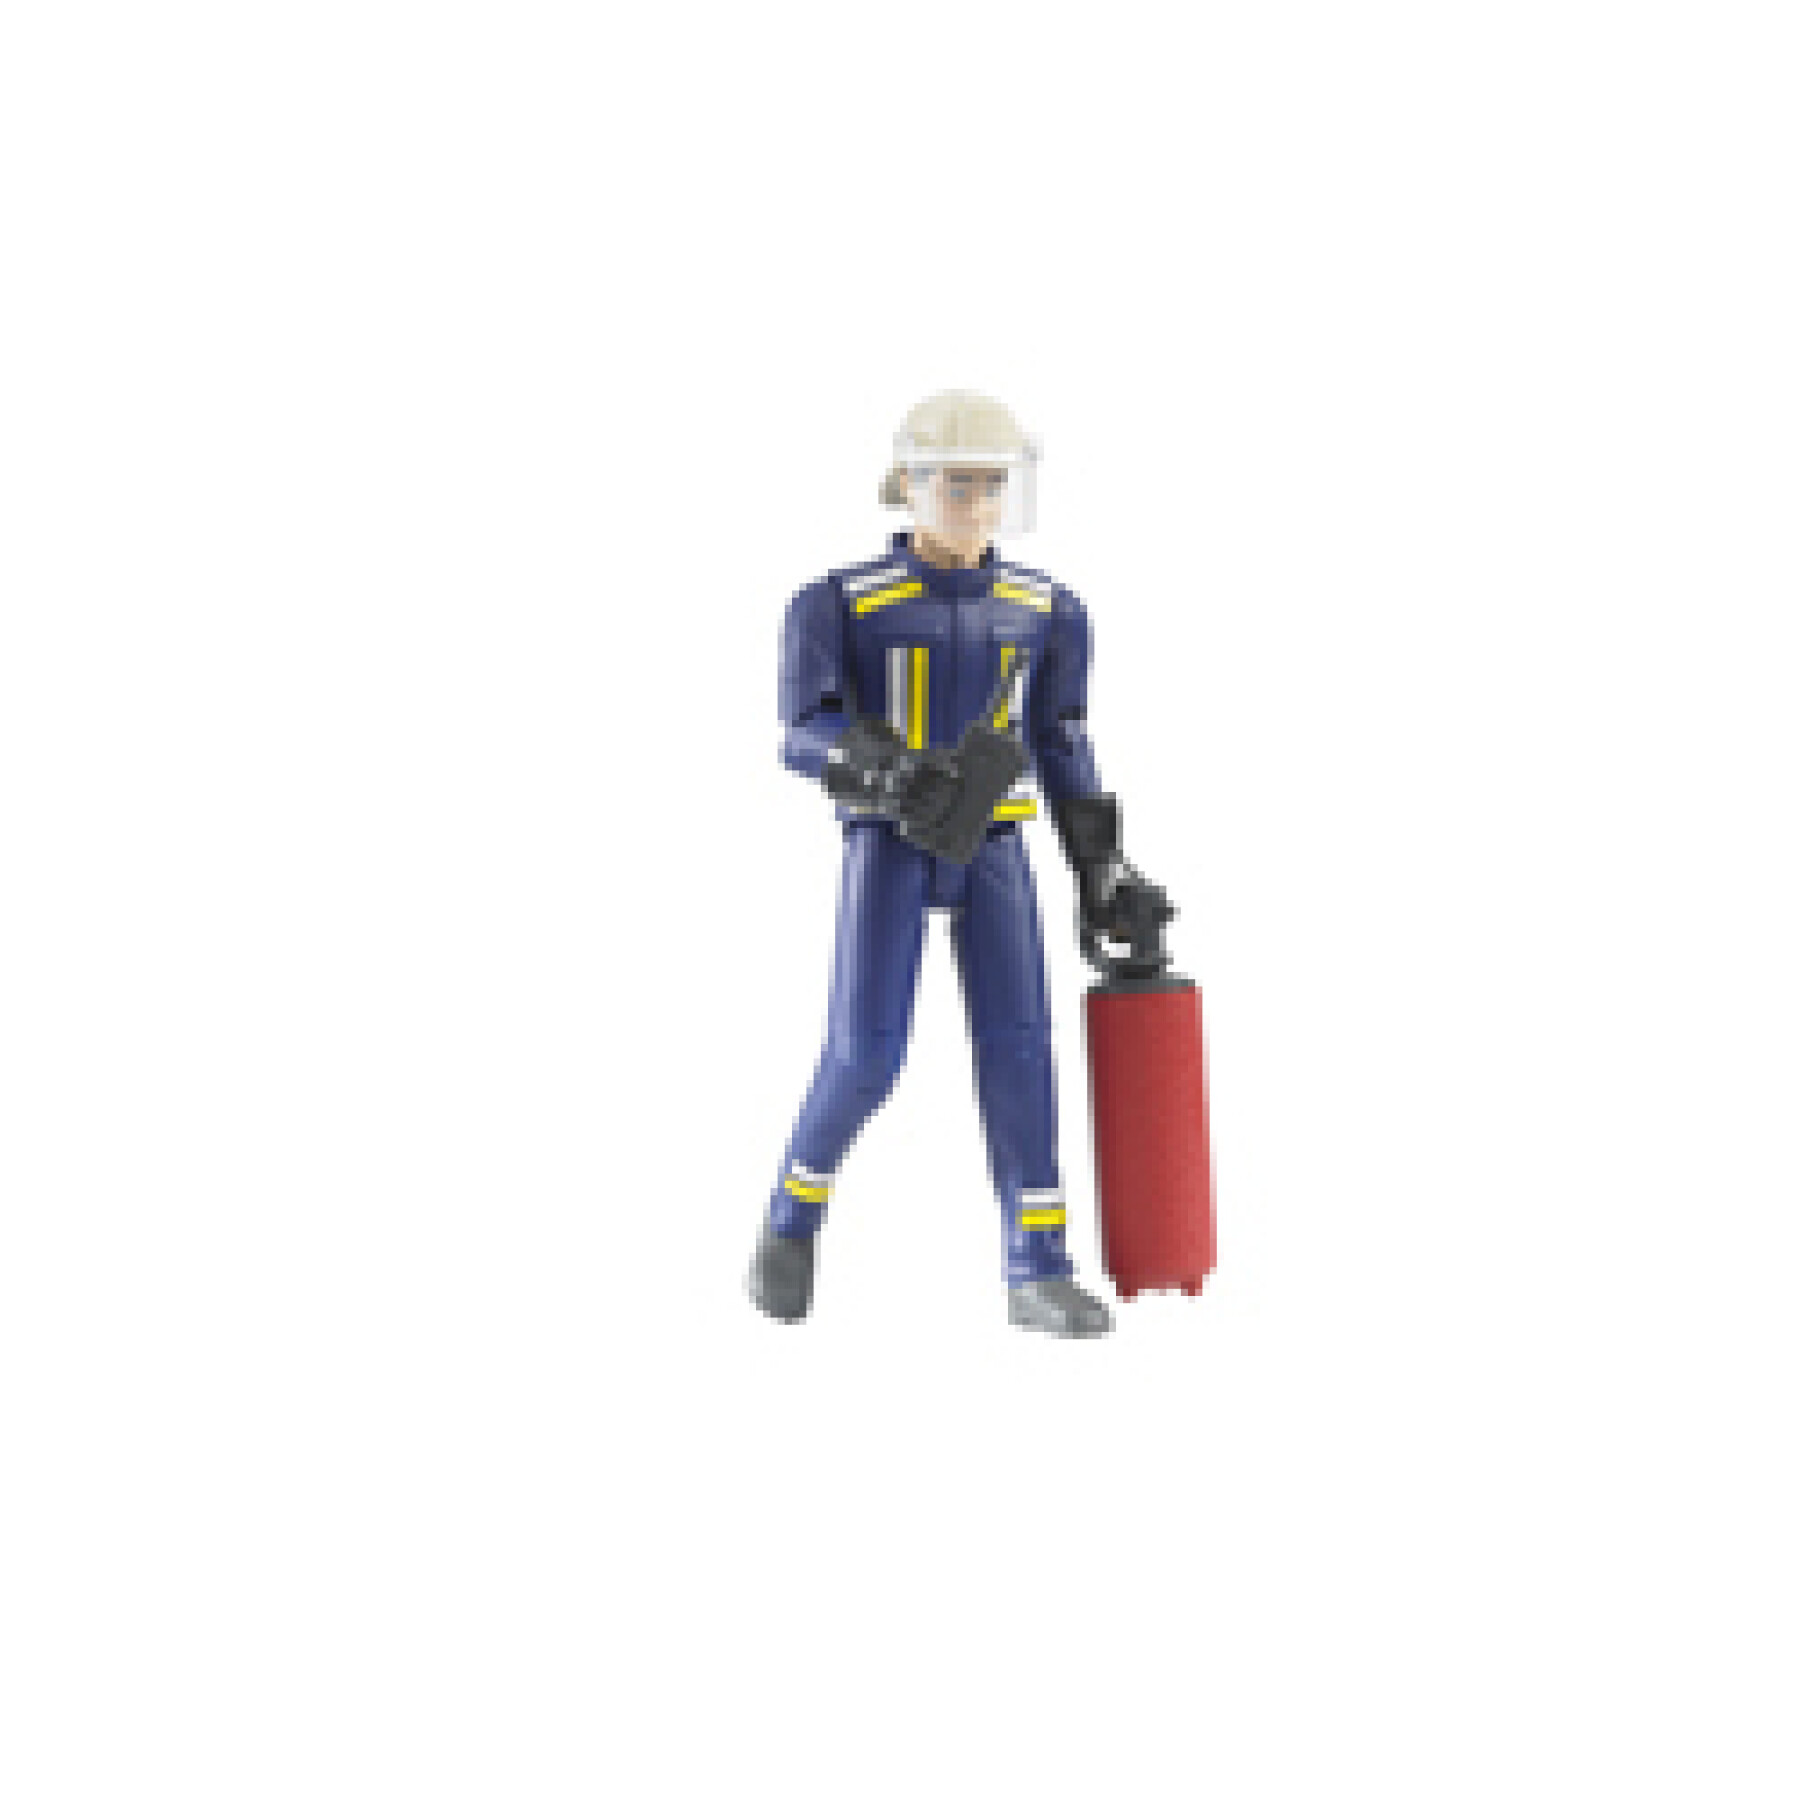 Figurine - fireman with accessories Bruder